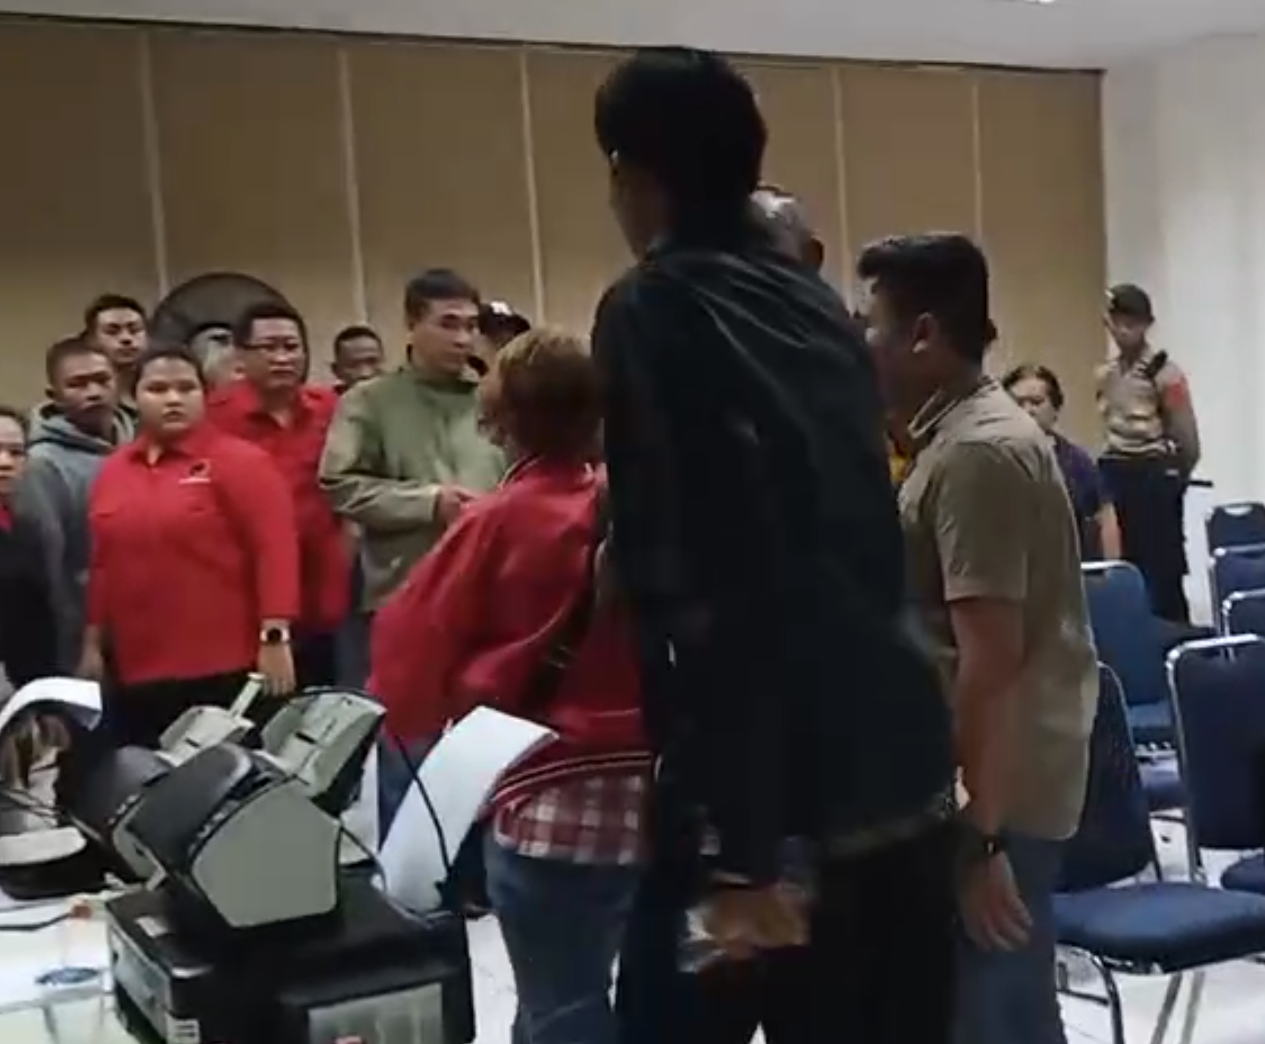 DUGAAN KECURANGAN: Salah satu kader PDIP masuk dan menerobos ke dalam ruang rapat pleno perhitungan suara tingkat Kota Sukabumi, Senin (4/3).